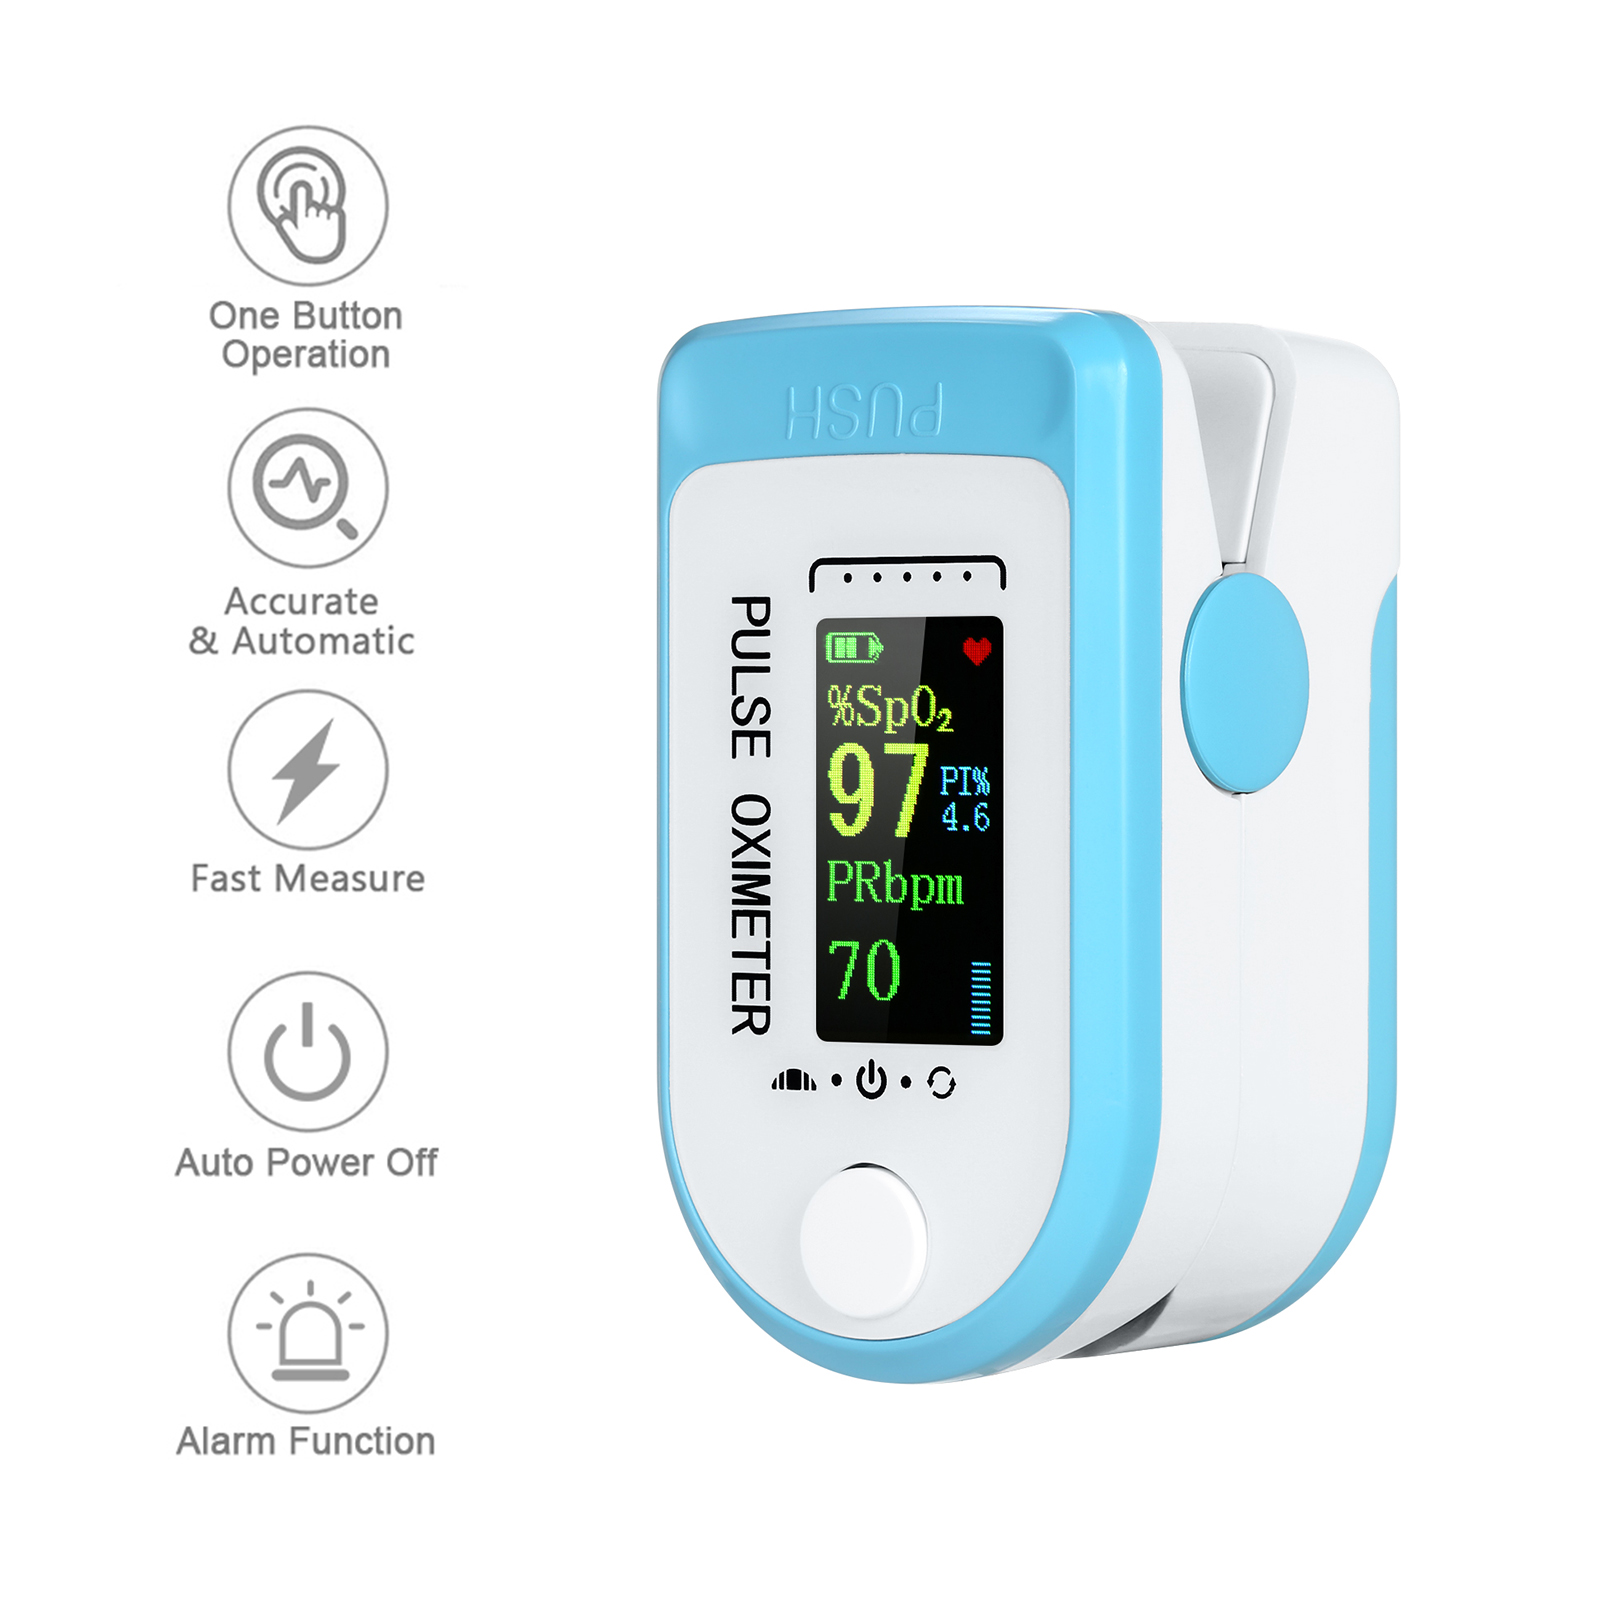 Bluetooth Fingertip Pulse Oximetro SpO2 PR PI Oximeter De Dedo Android IOS APP Blood Oxygen Saturation Heart Rate Detection Oximeter